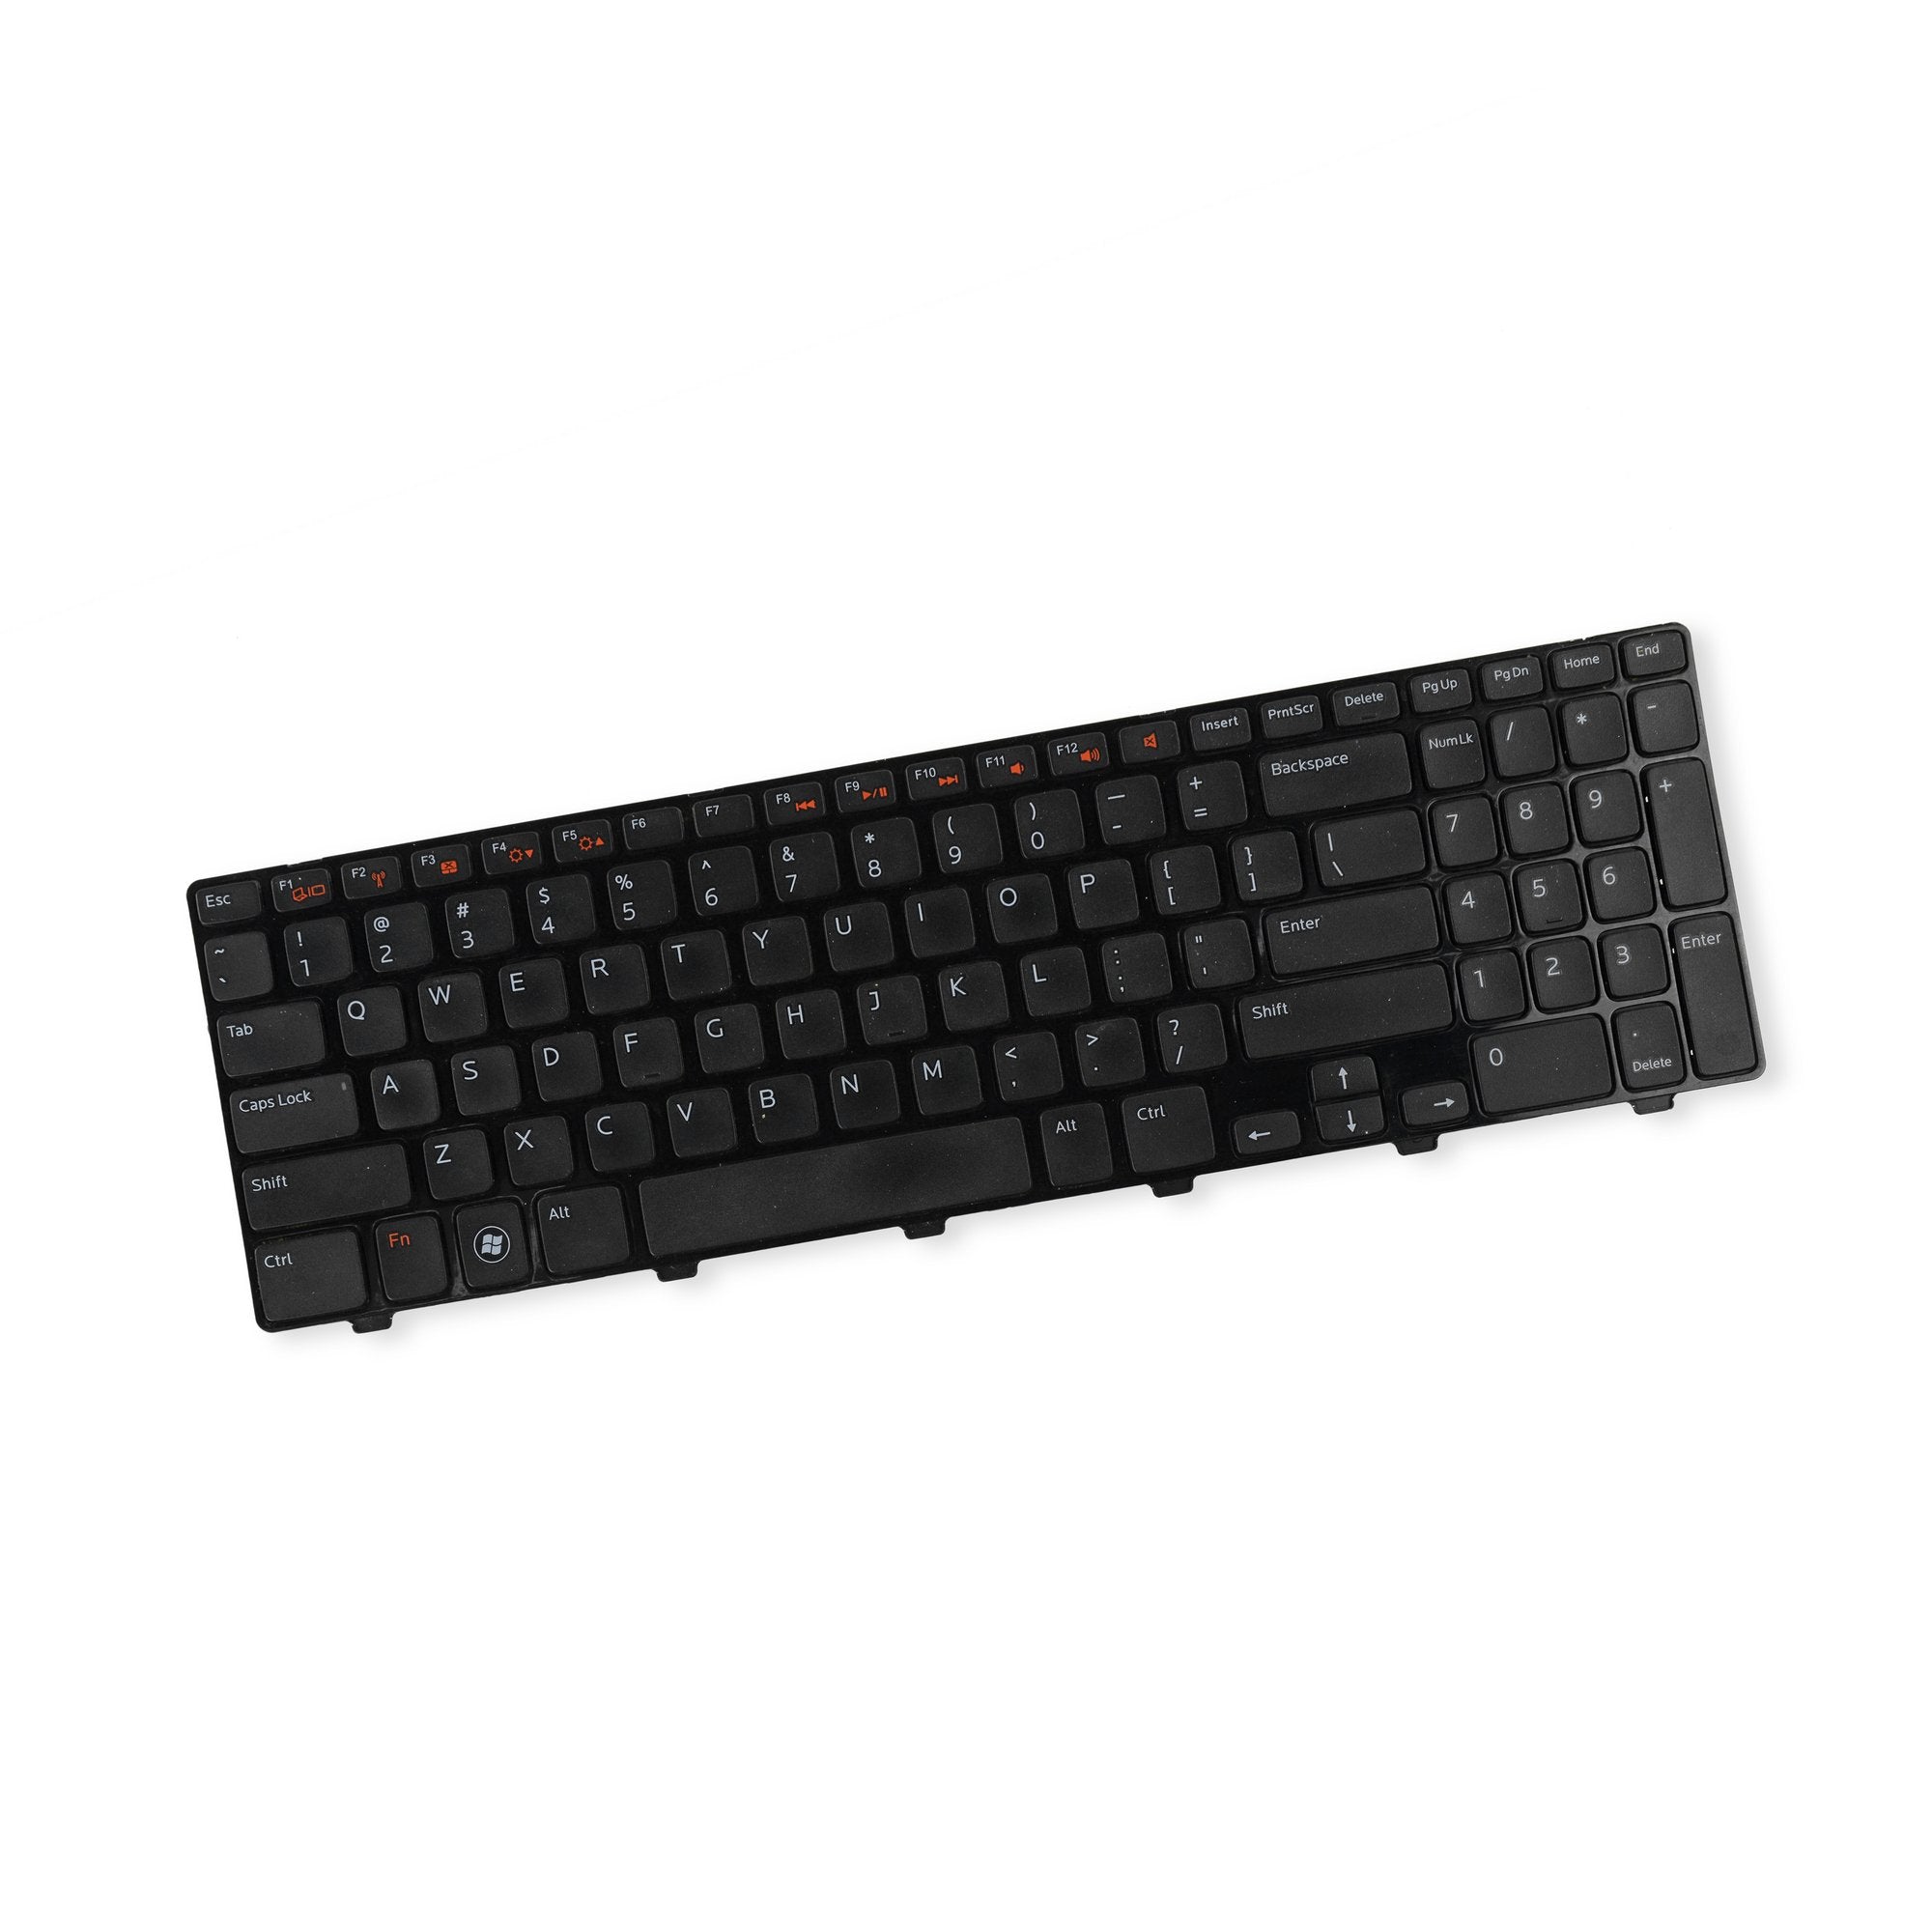 Dell Inspiron 17R (5721) Keyboard